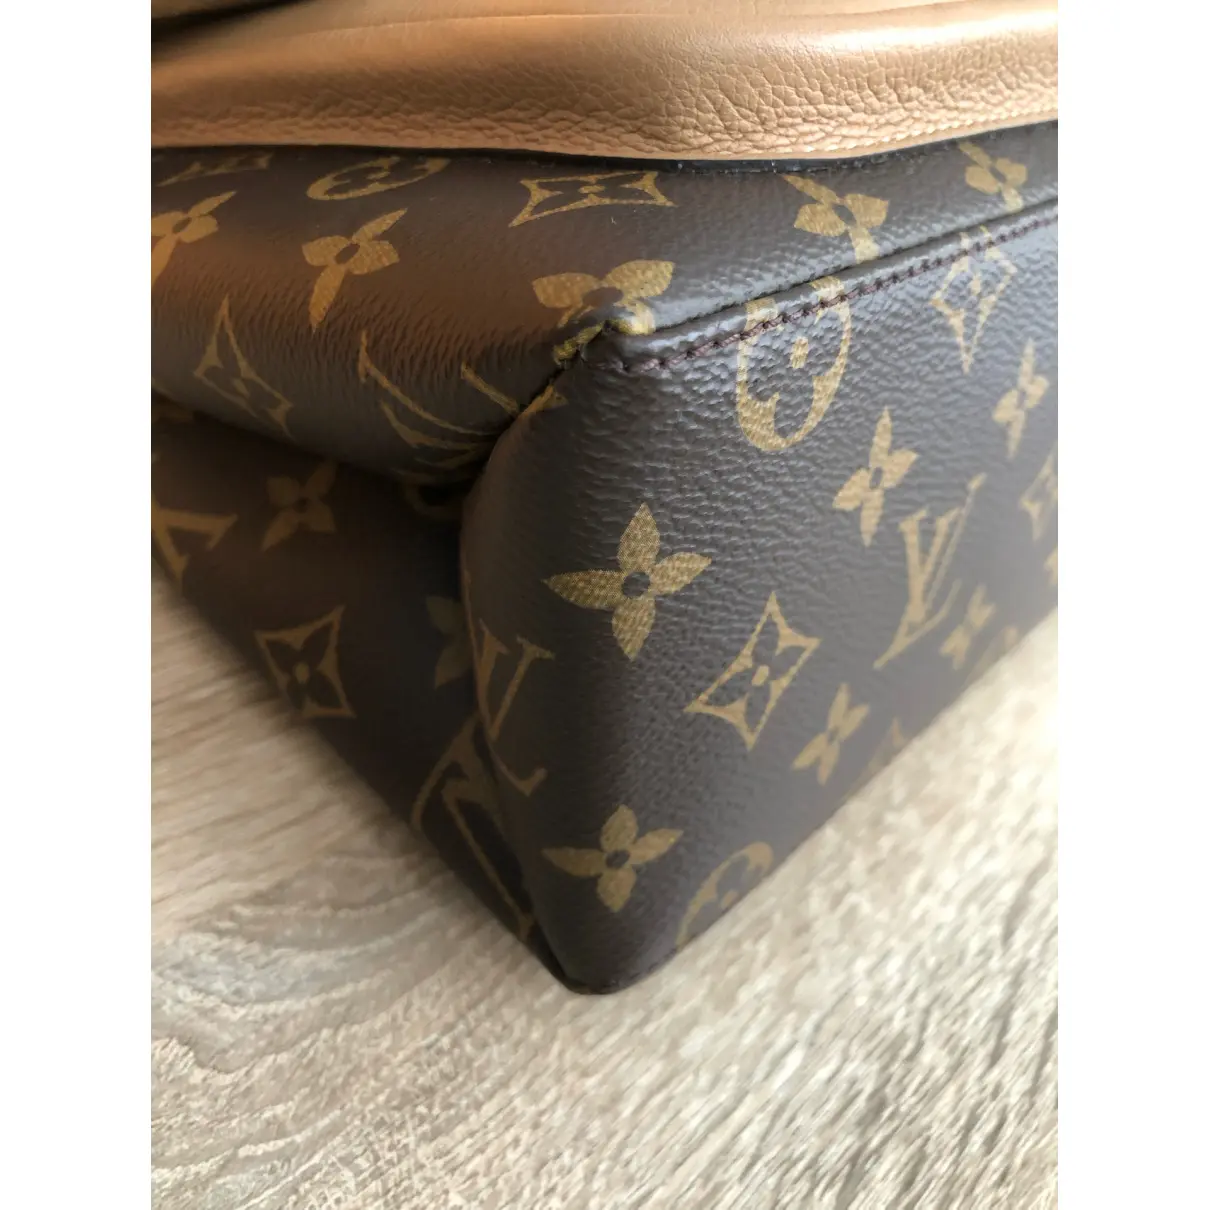 Marignan cloth handbag Louis Vuitton